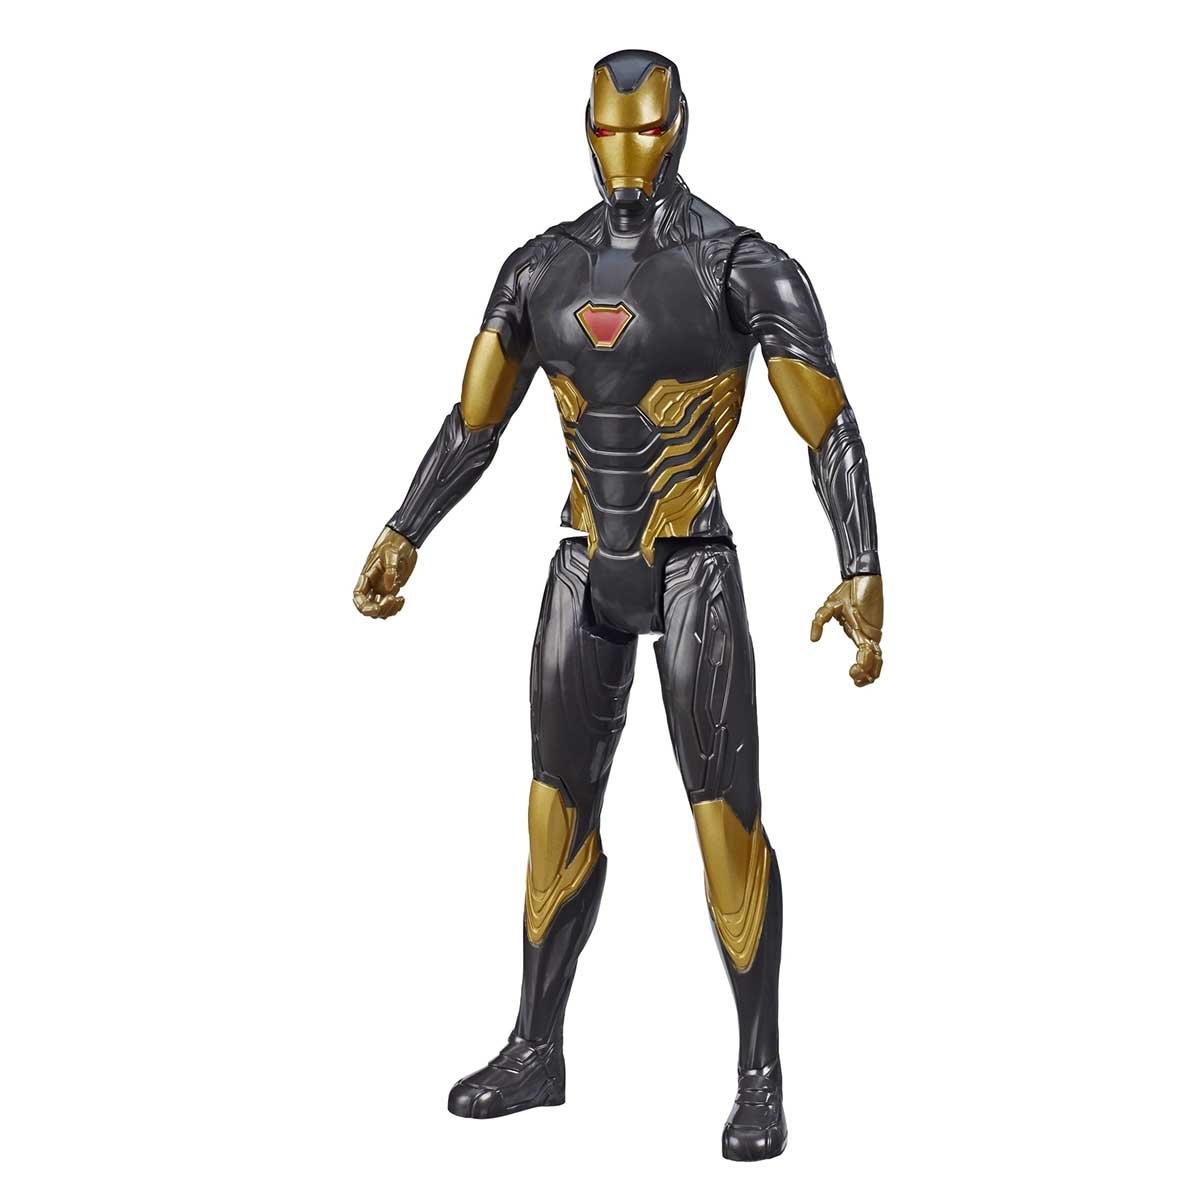 Figura de Iron Man Avengers Titan Hero Series Blast Gear Marvel